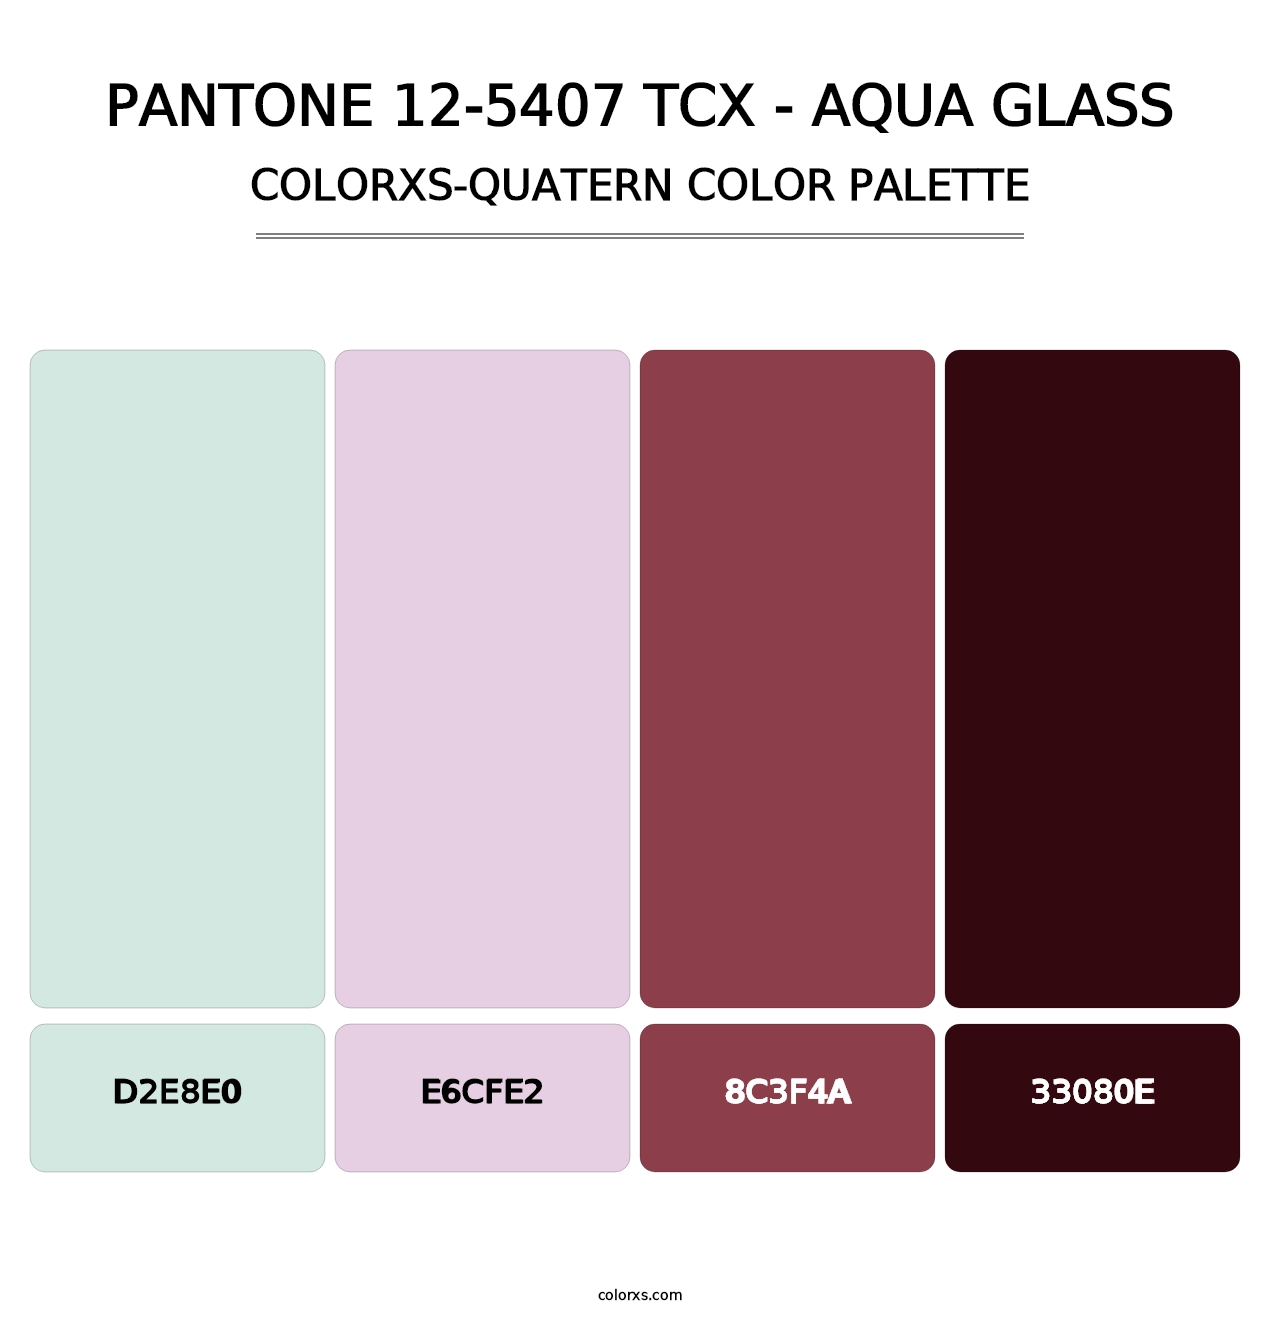 PANTONE 12-5407 TCX - Aqua Glass - Colorxs Quatern Palette